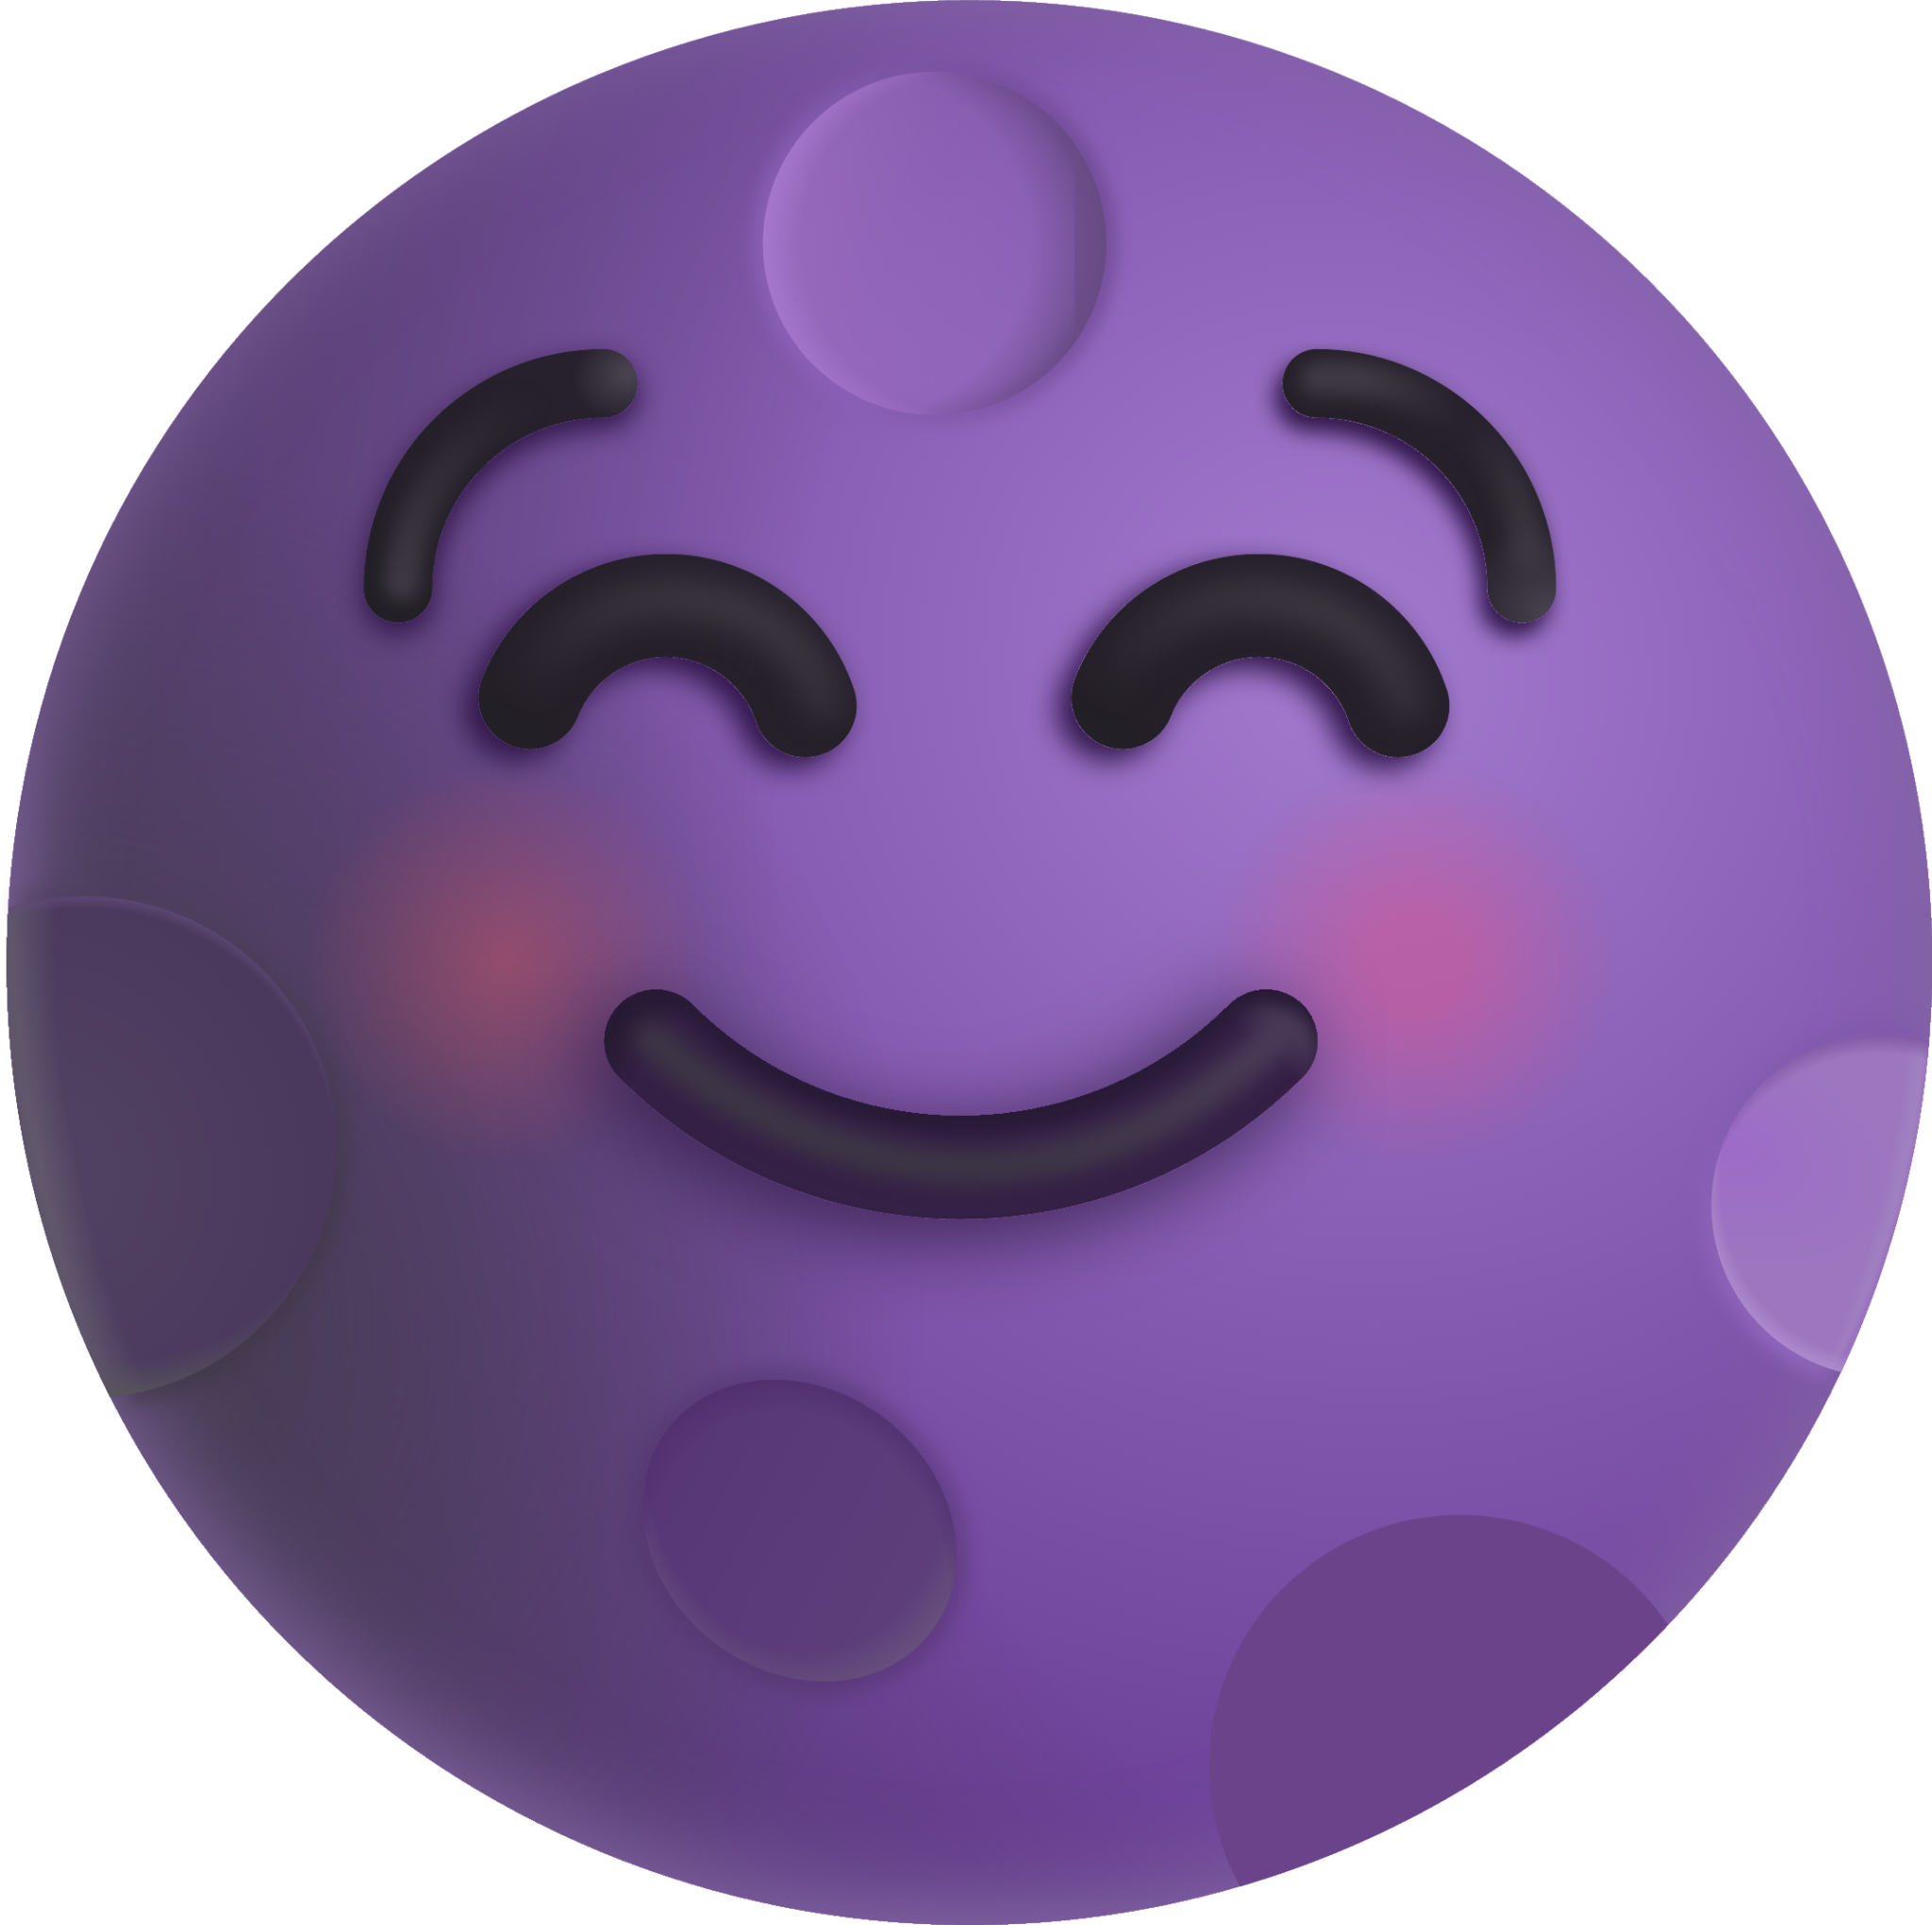 new moon face emoji